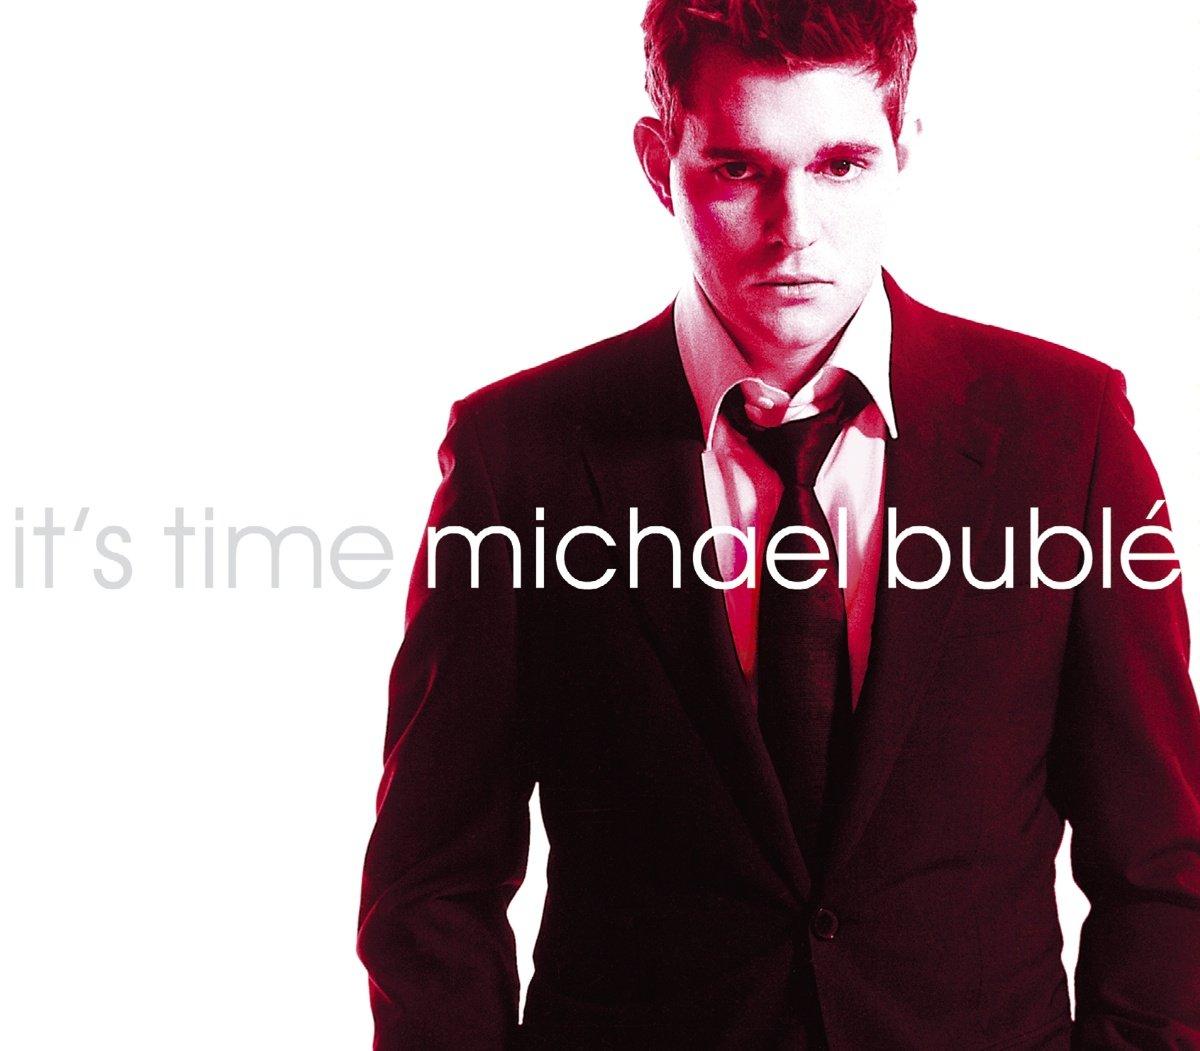 Michael Buble's Time.com Music